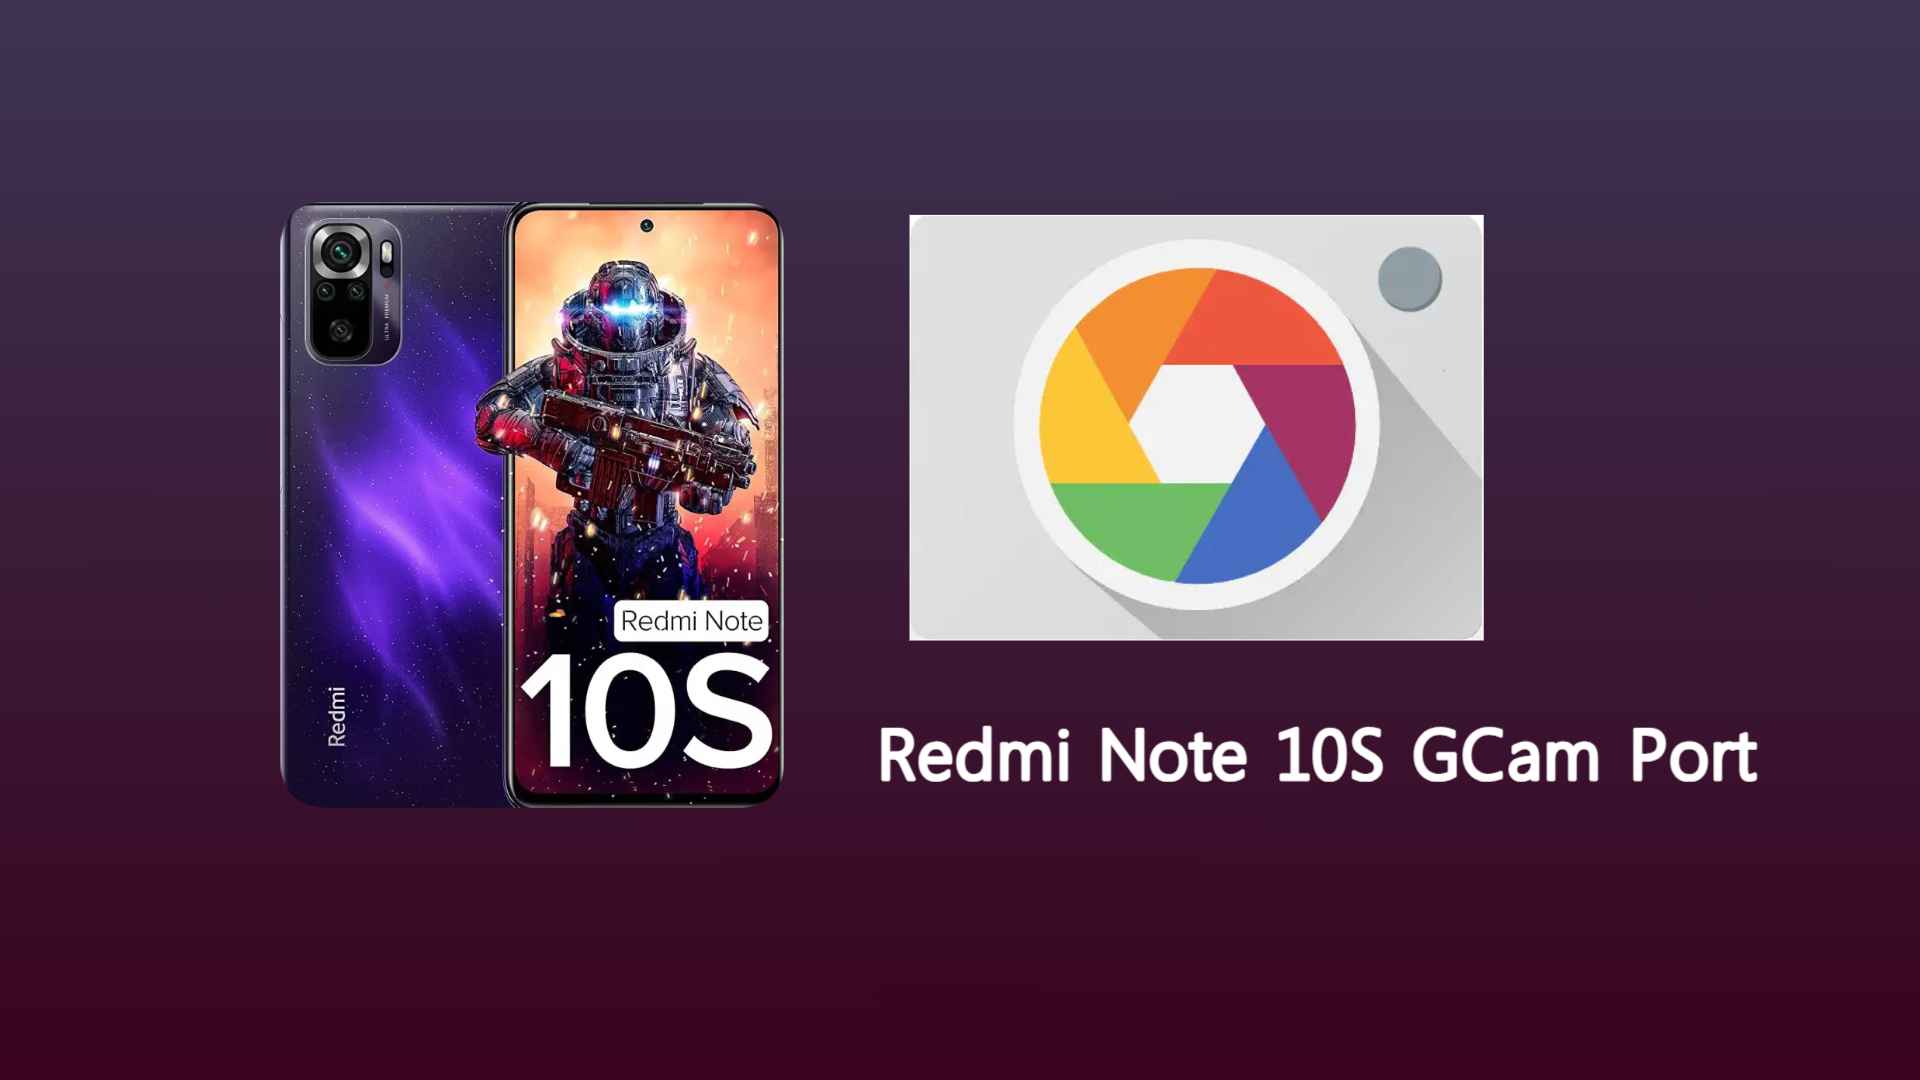 Redmi Note 10S GCam Port